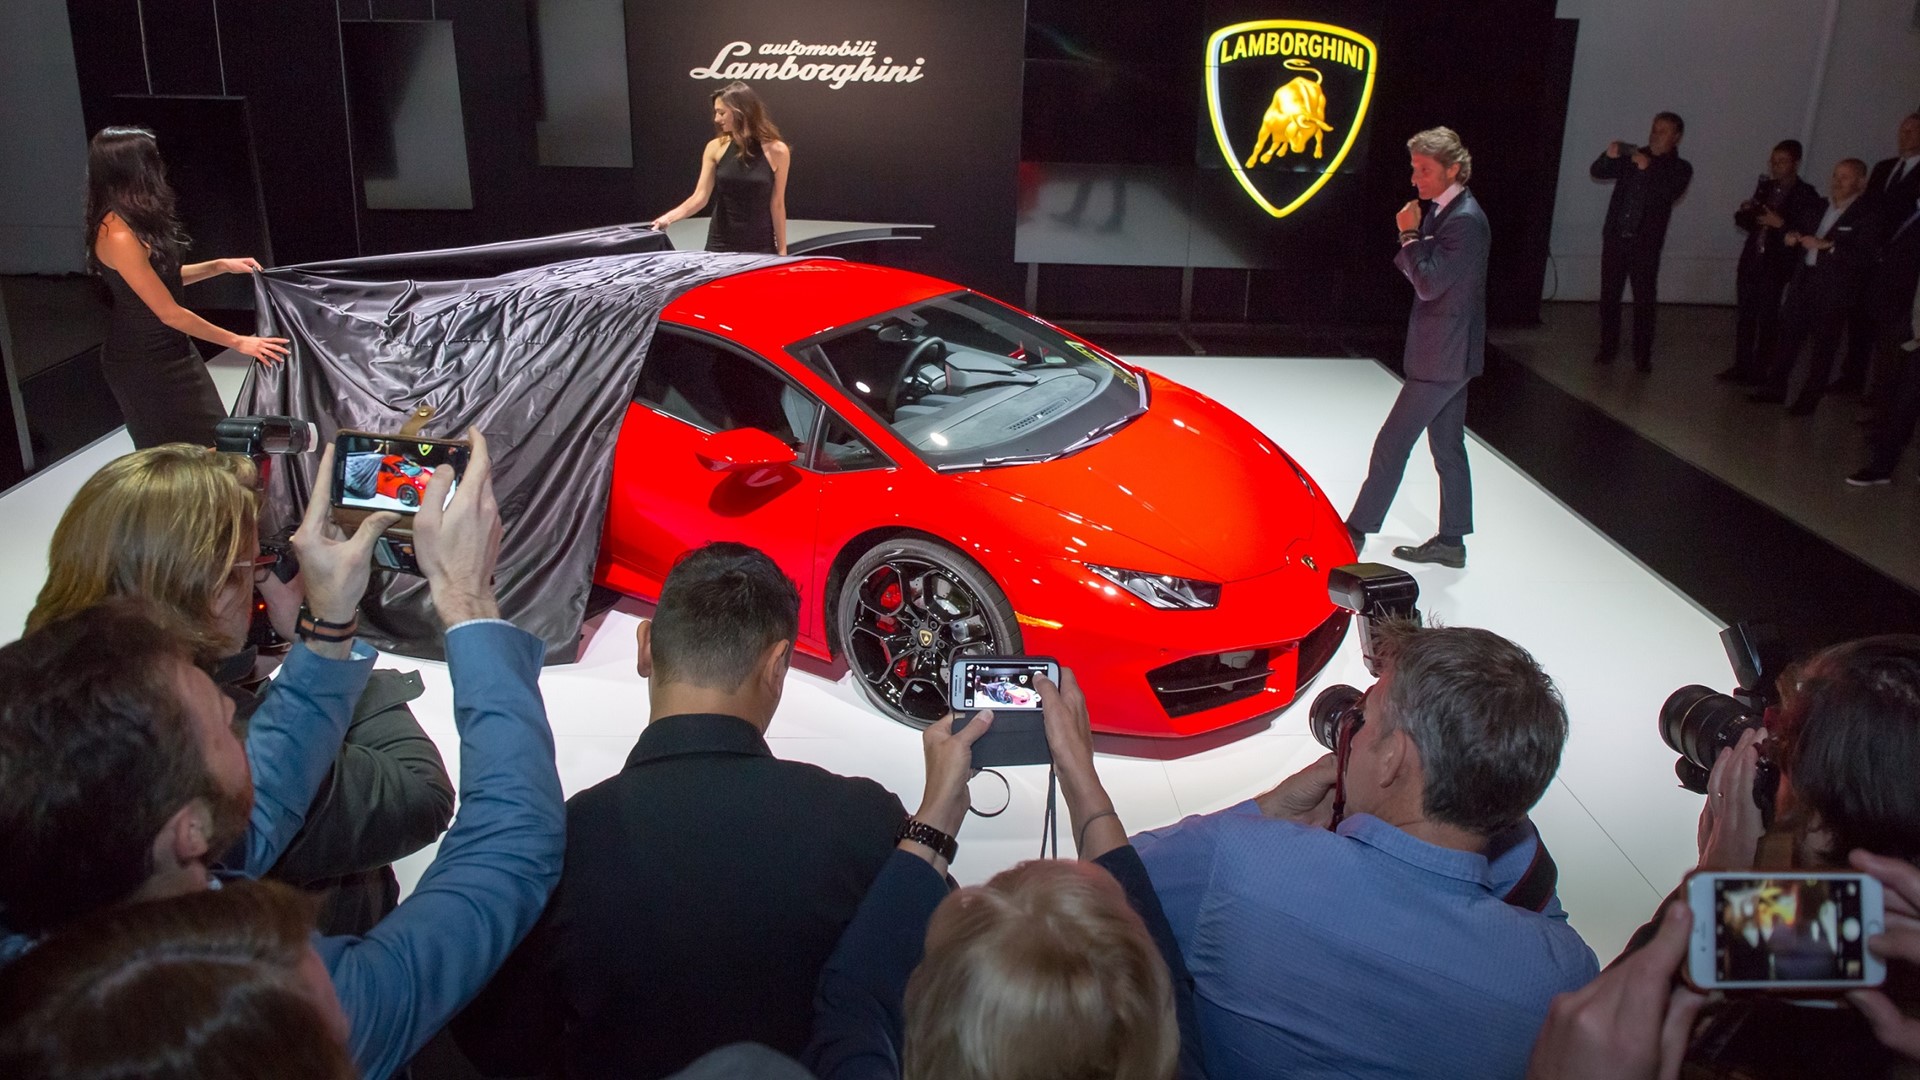 Lamborghini reveals latest super sports car ahead of Los Angeles Auto Show